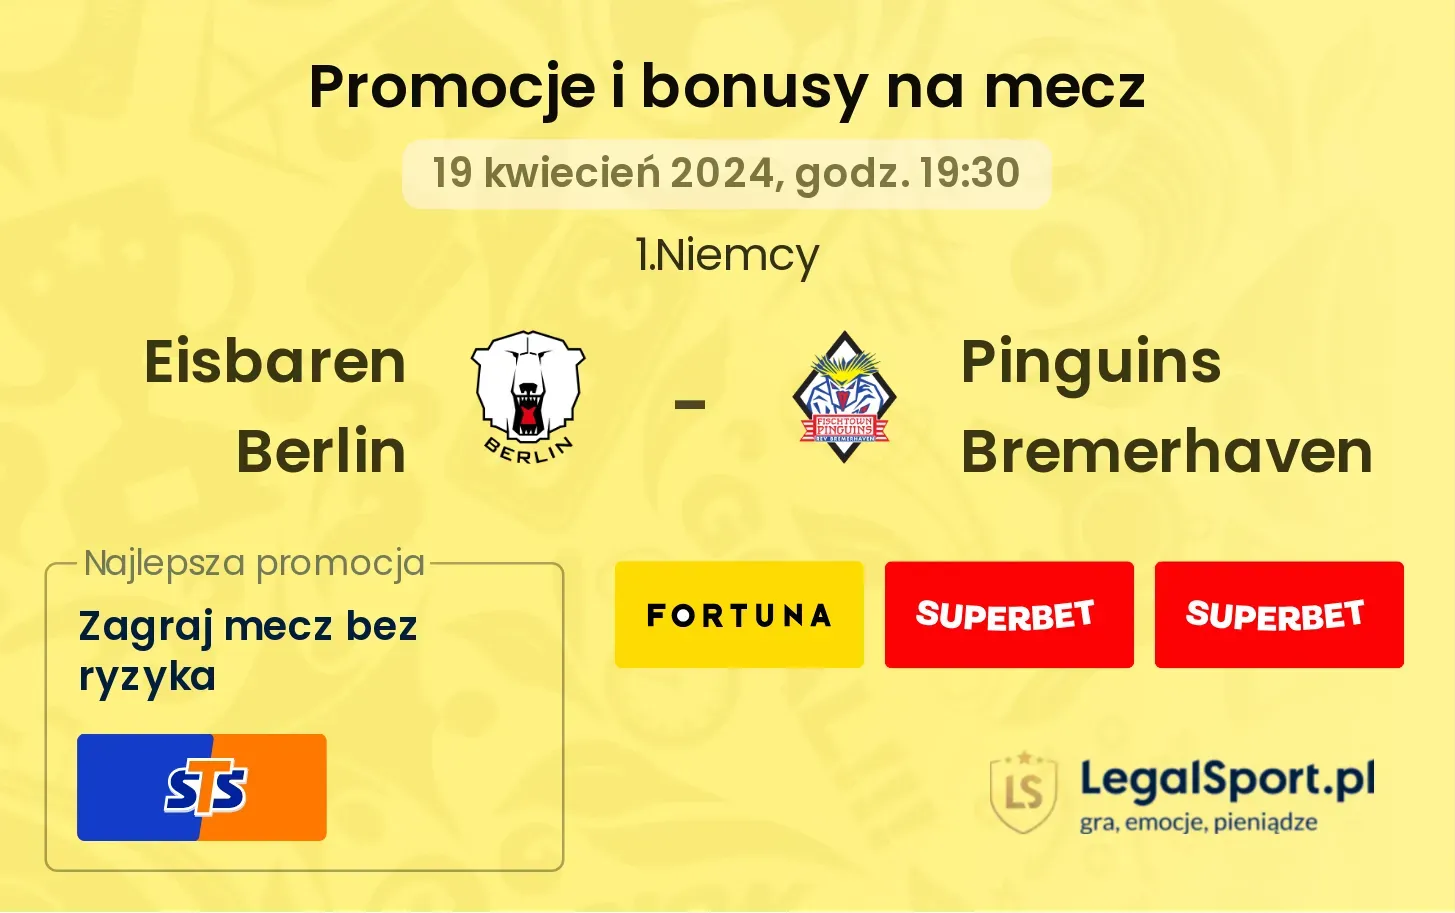  Eisbaren Berlin - Pinguins Bremerhaven promocje bonusy na mecz